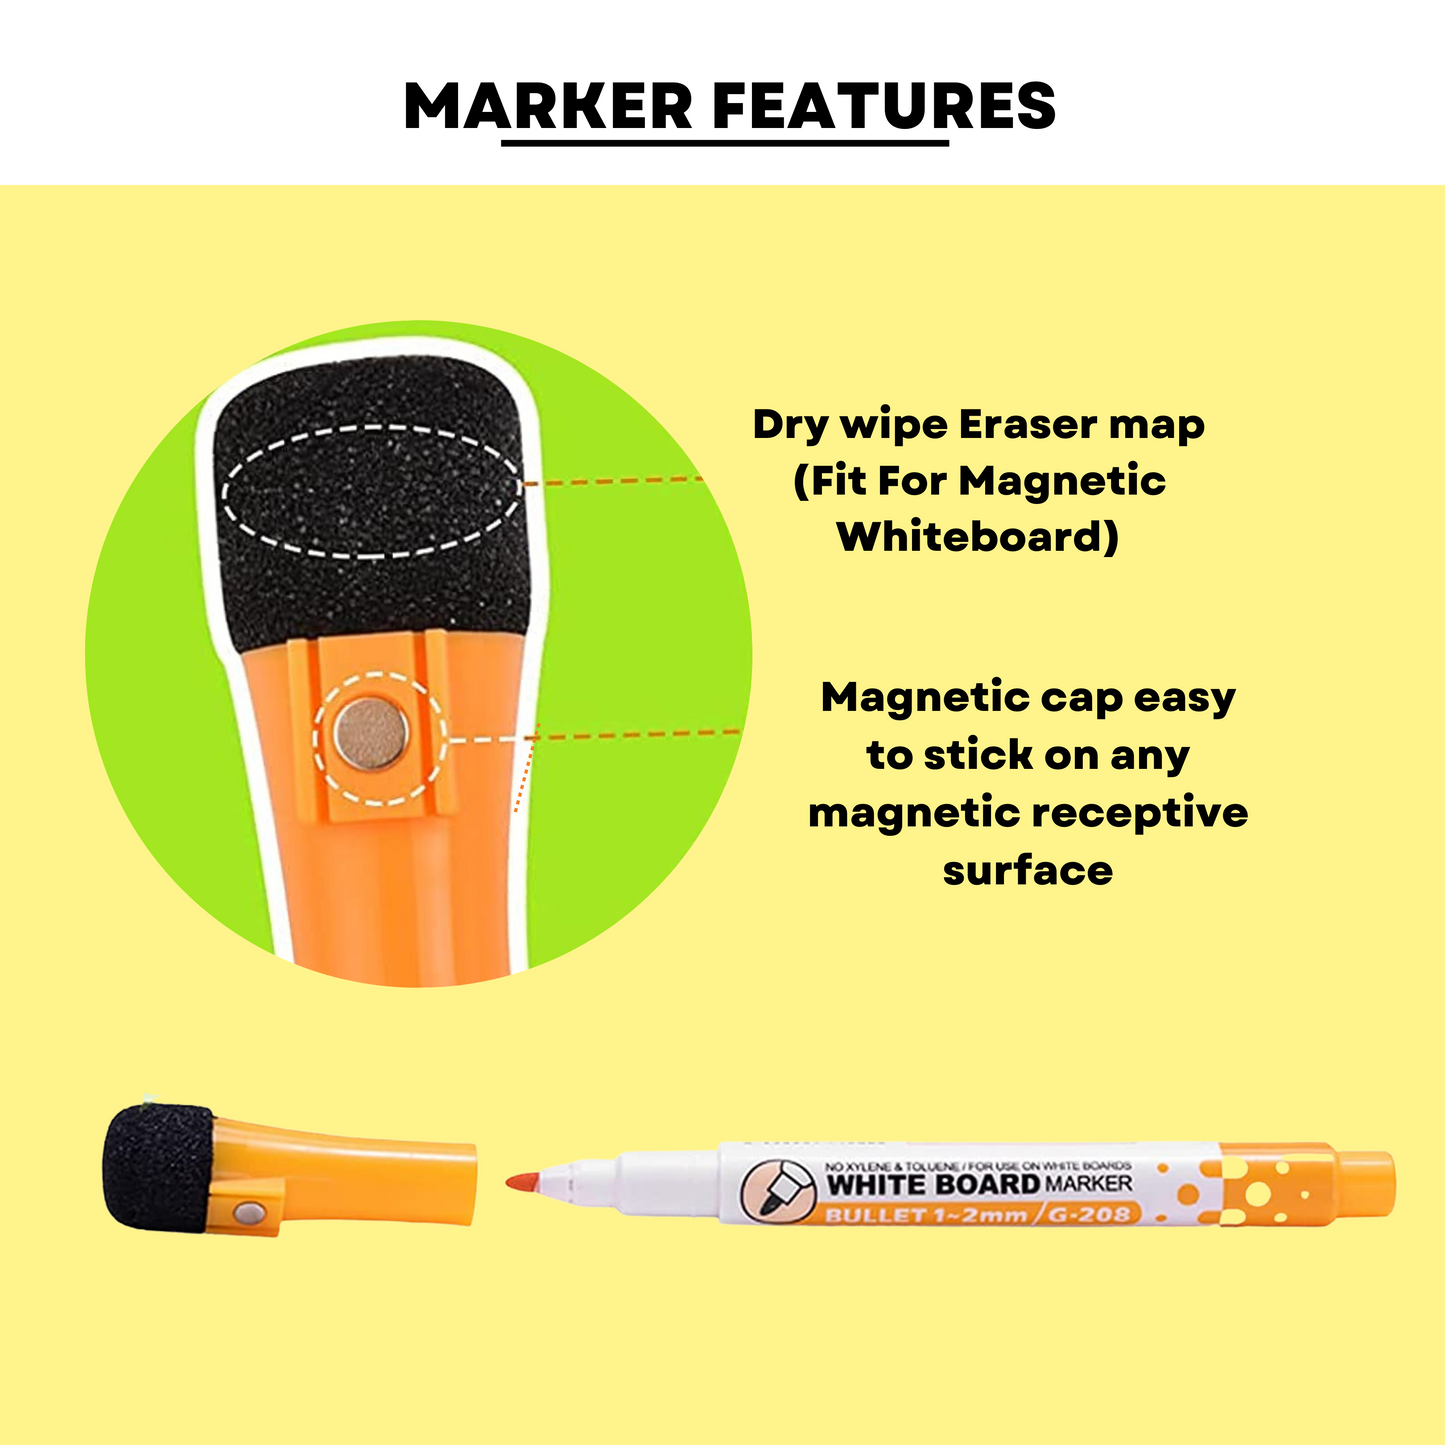 Magnetic Weekly Calendar Planner with 3 Marker pen Duster Set Magnetic Board- #Royalkart#Magnetic planner